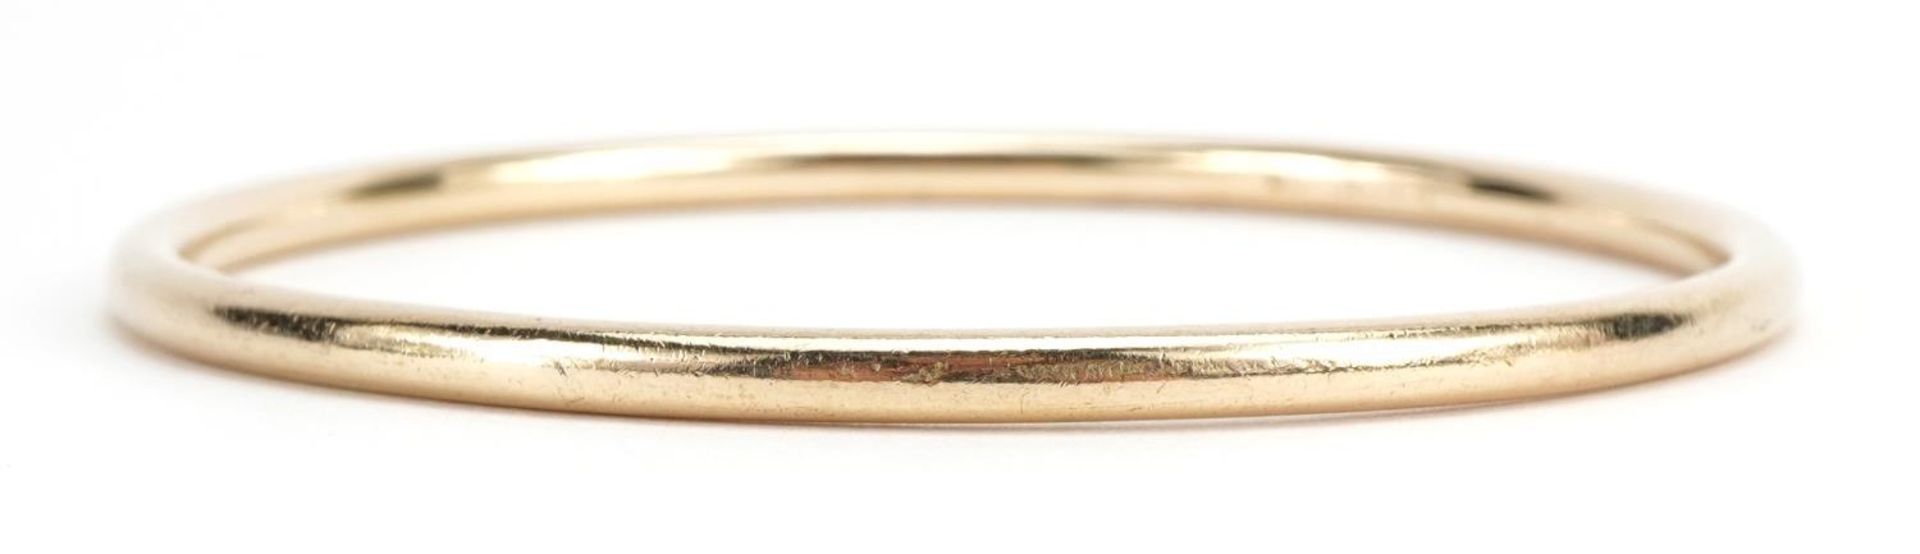 9ct gold bangle, 7.6cm in diameter, 28.5g - Image 2 of 3